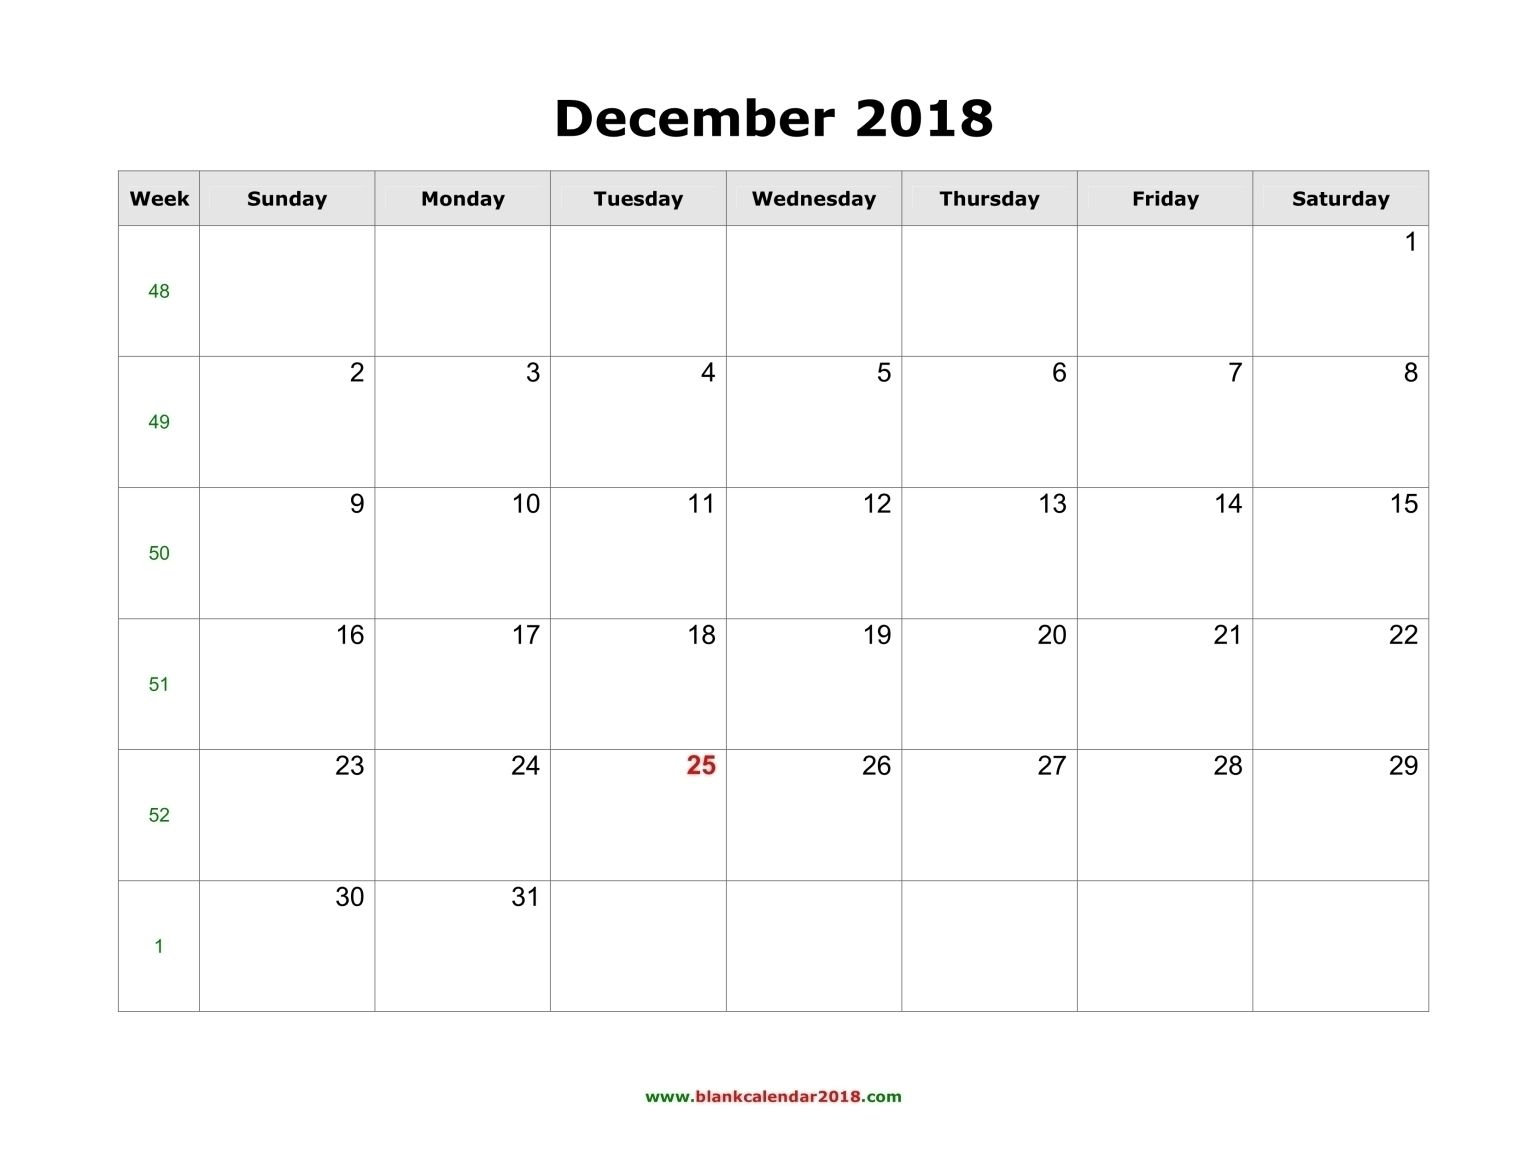 December 2018 Calendar Printable 8X11 | Blank Calendar within Blank Instagram Template 2018